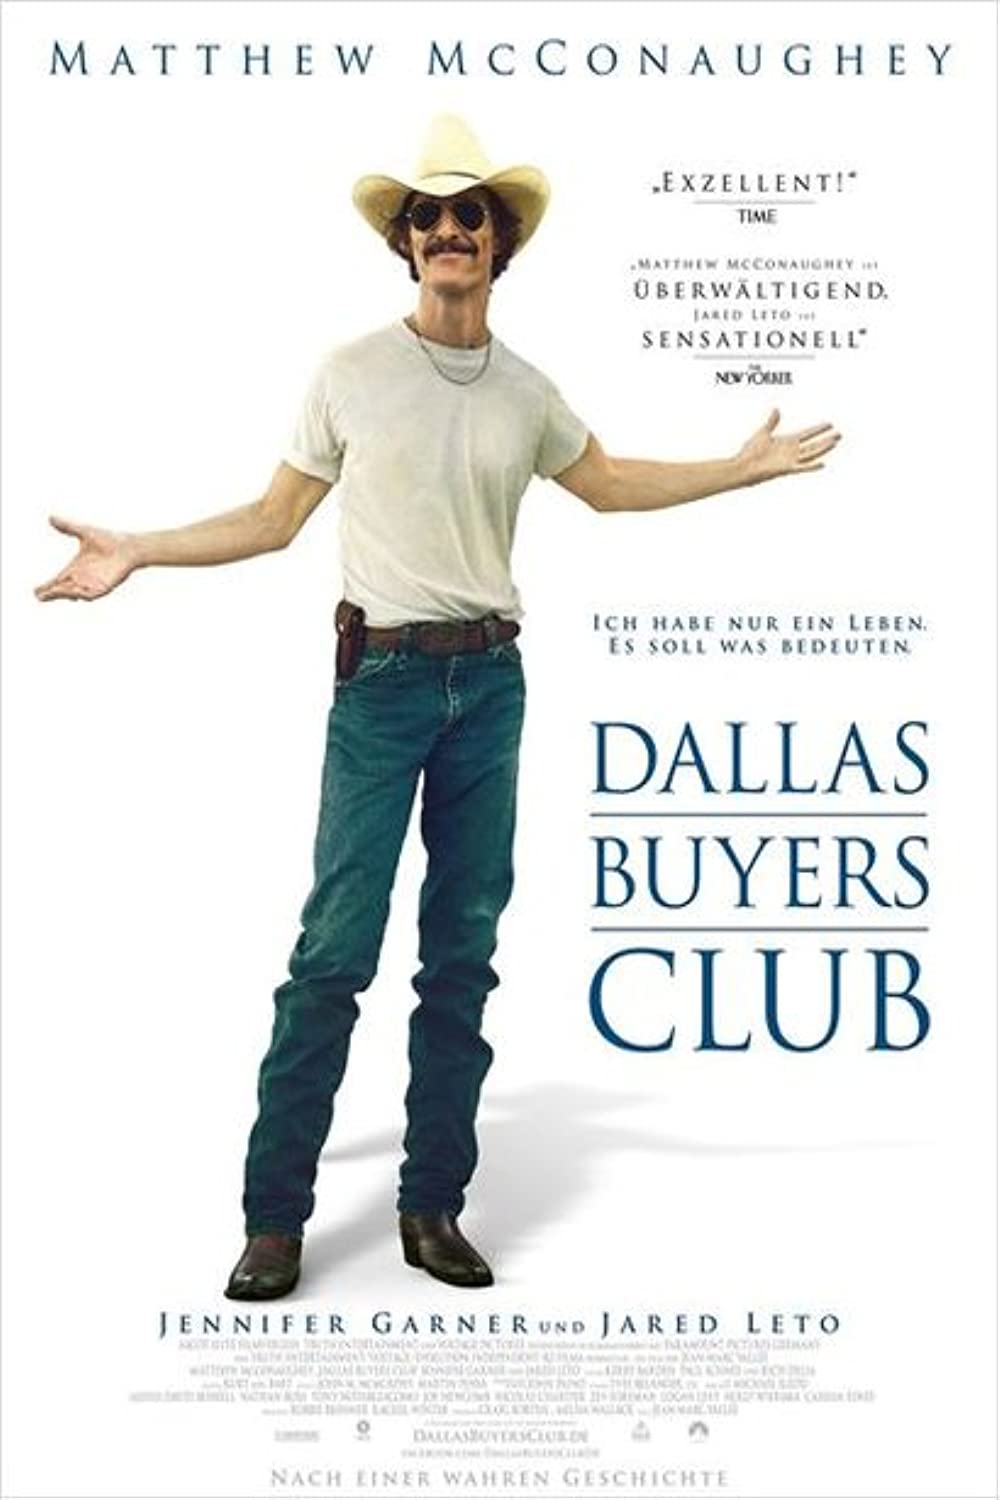 Filmbeschreibung zu Dallas Buyers Club (OV)